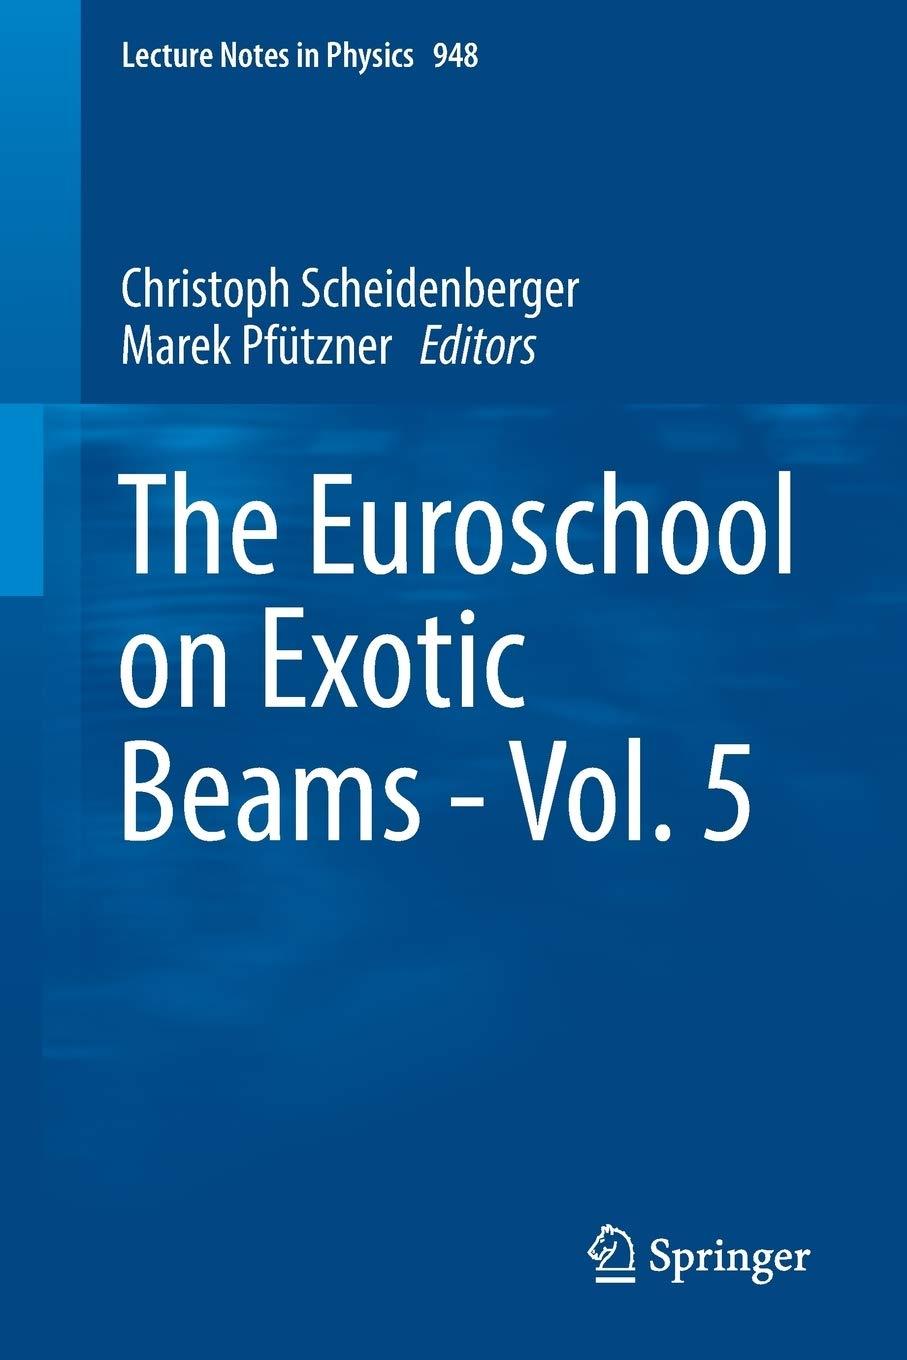 the euroschool on exotic beams vol. 5 1st edition christoph scheidenberger, marek pfützner 3319748777,